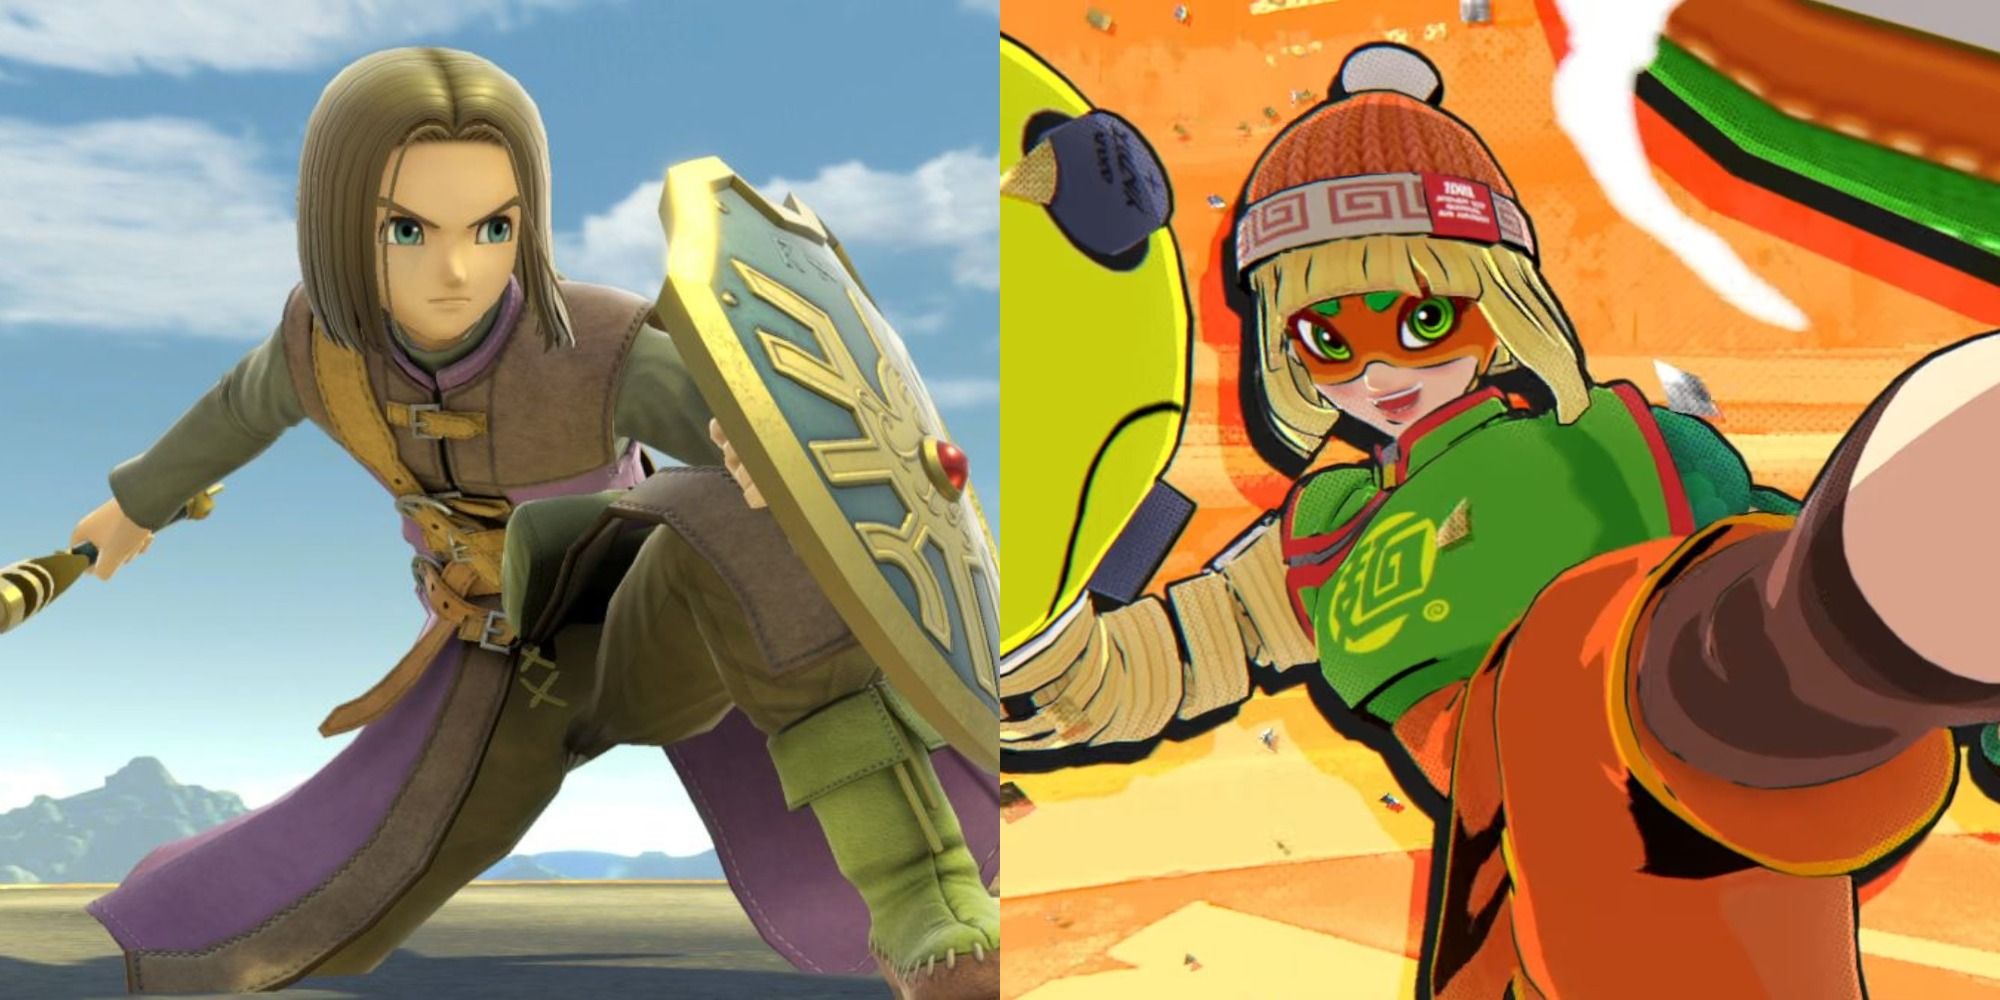 Split image showing Hero and Min Min in Super Smash Bros. Ultimate